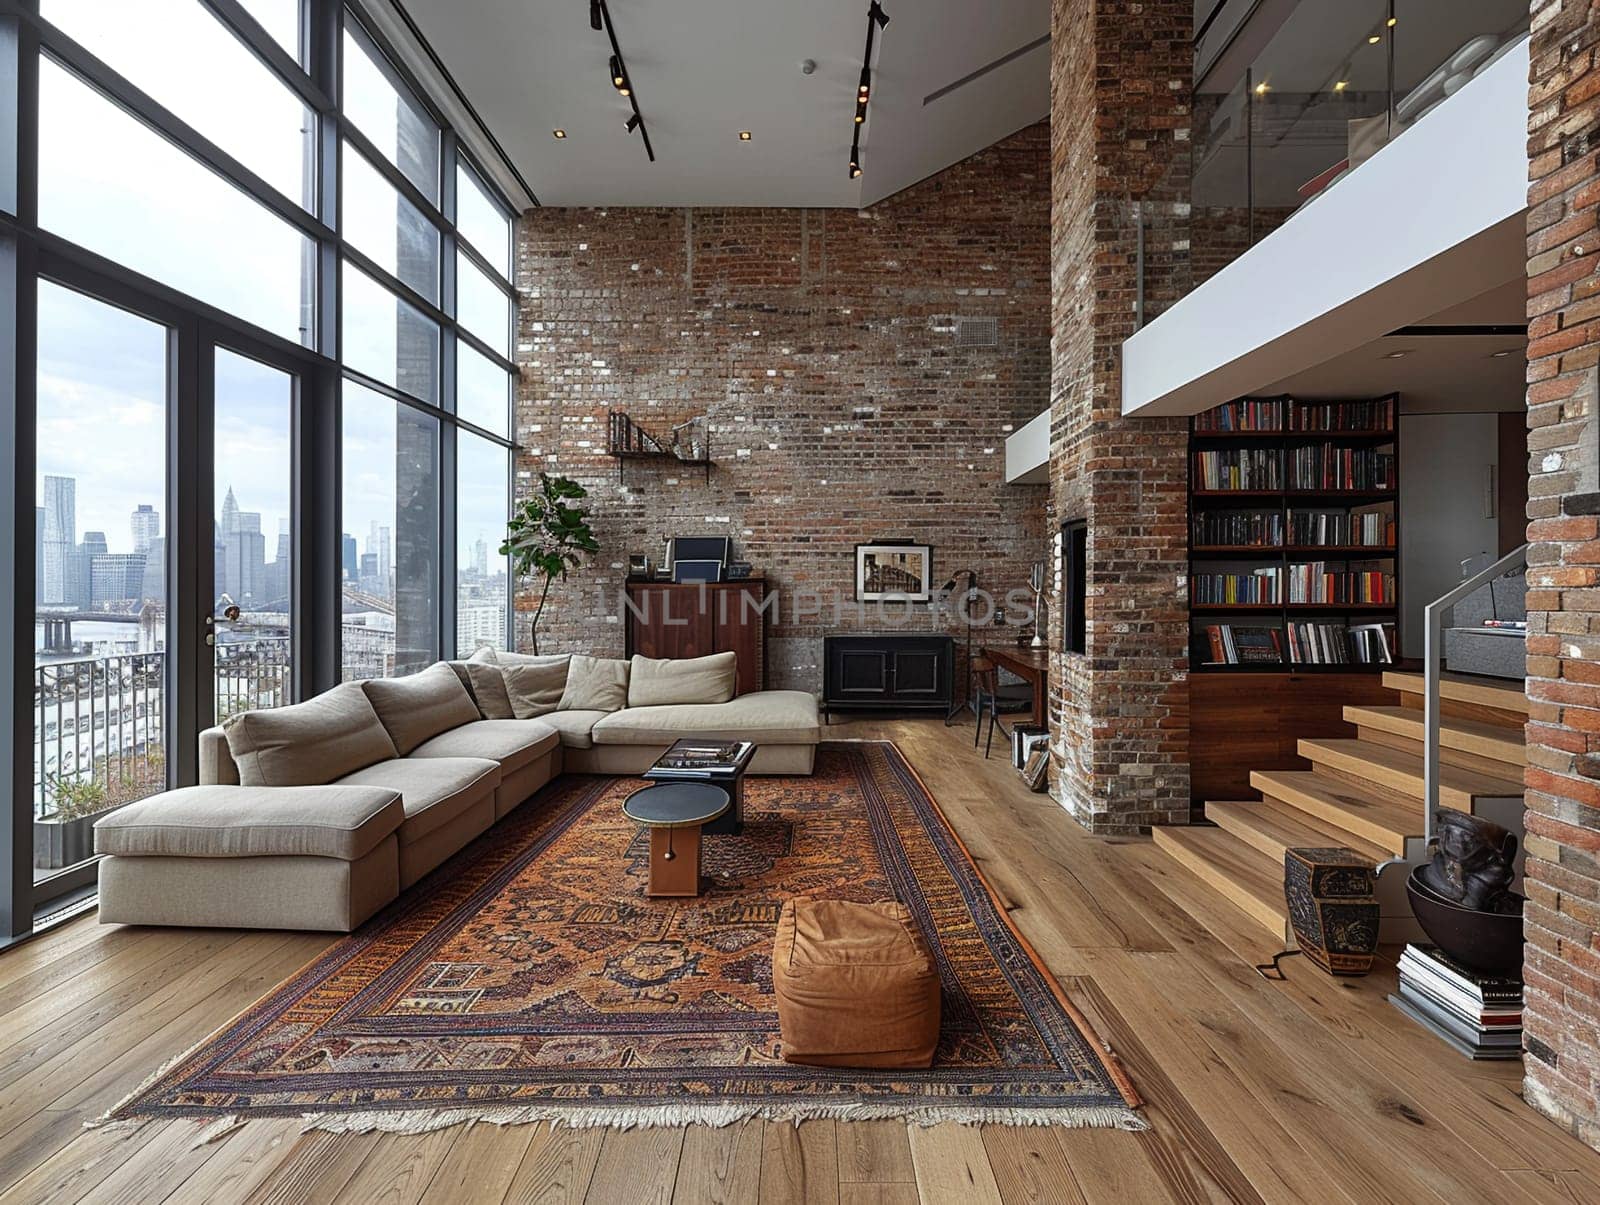 Minimalist urban loft with exposed brick and large, floor-to-ceiling windows